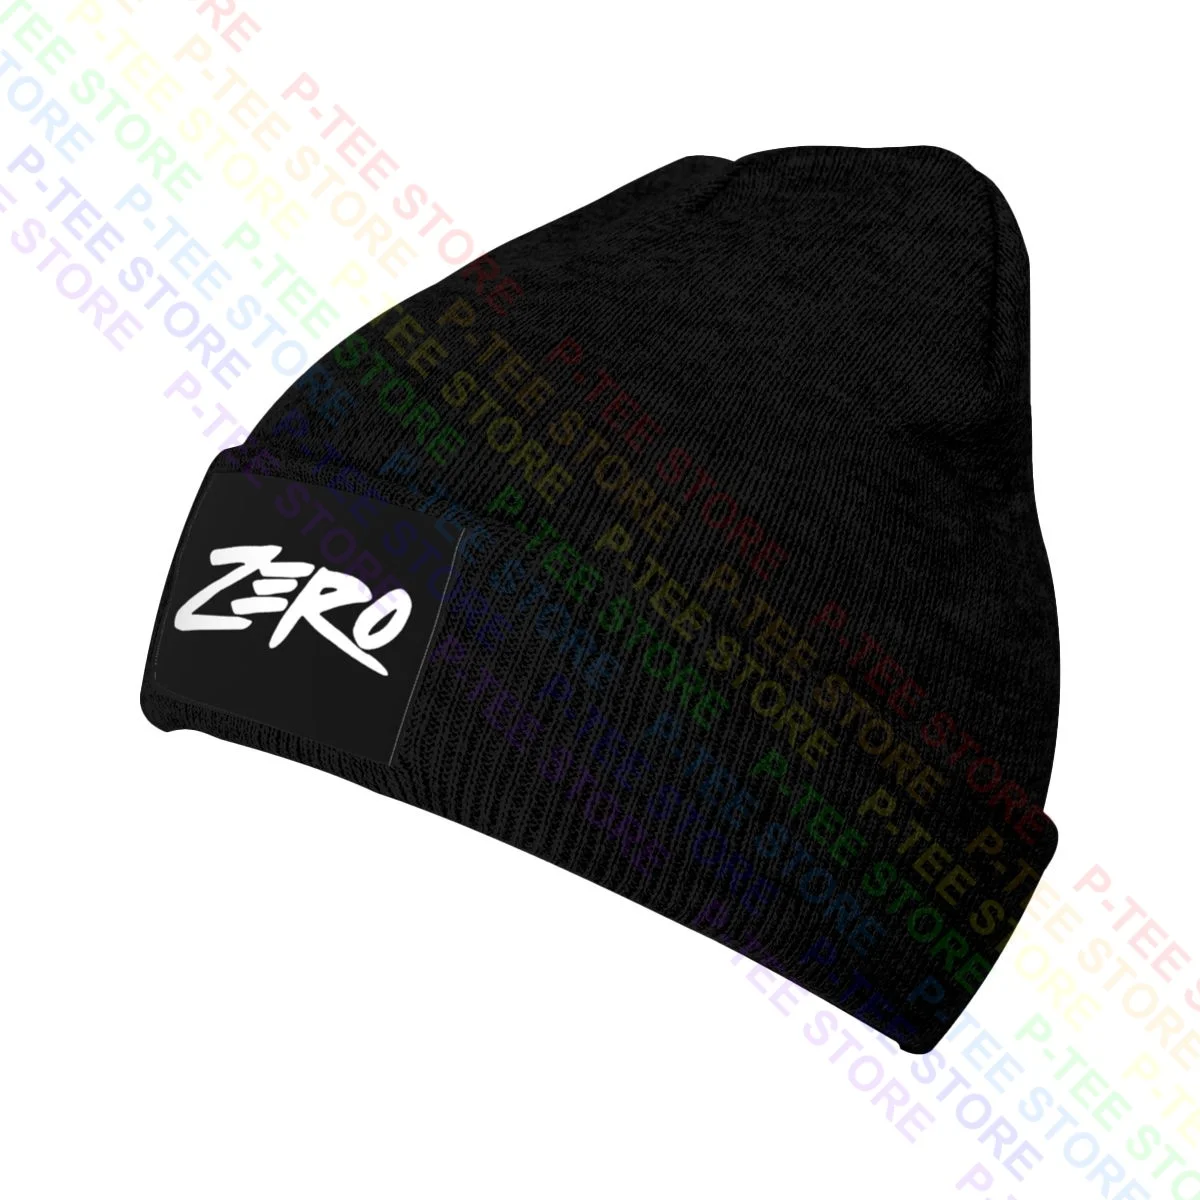 Вязаная шапка «Крис Коул», «Zero» | Шапки | AliExpress